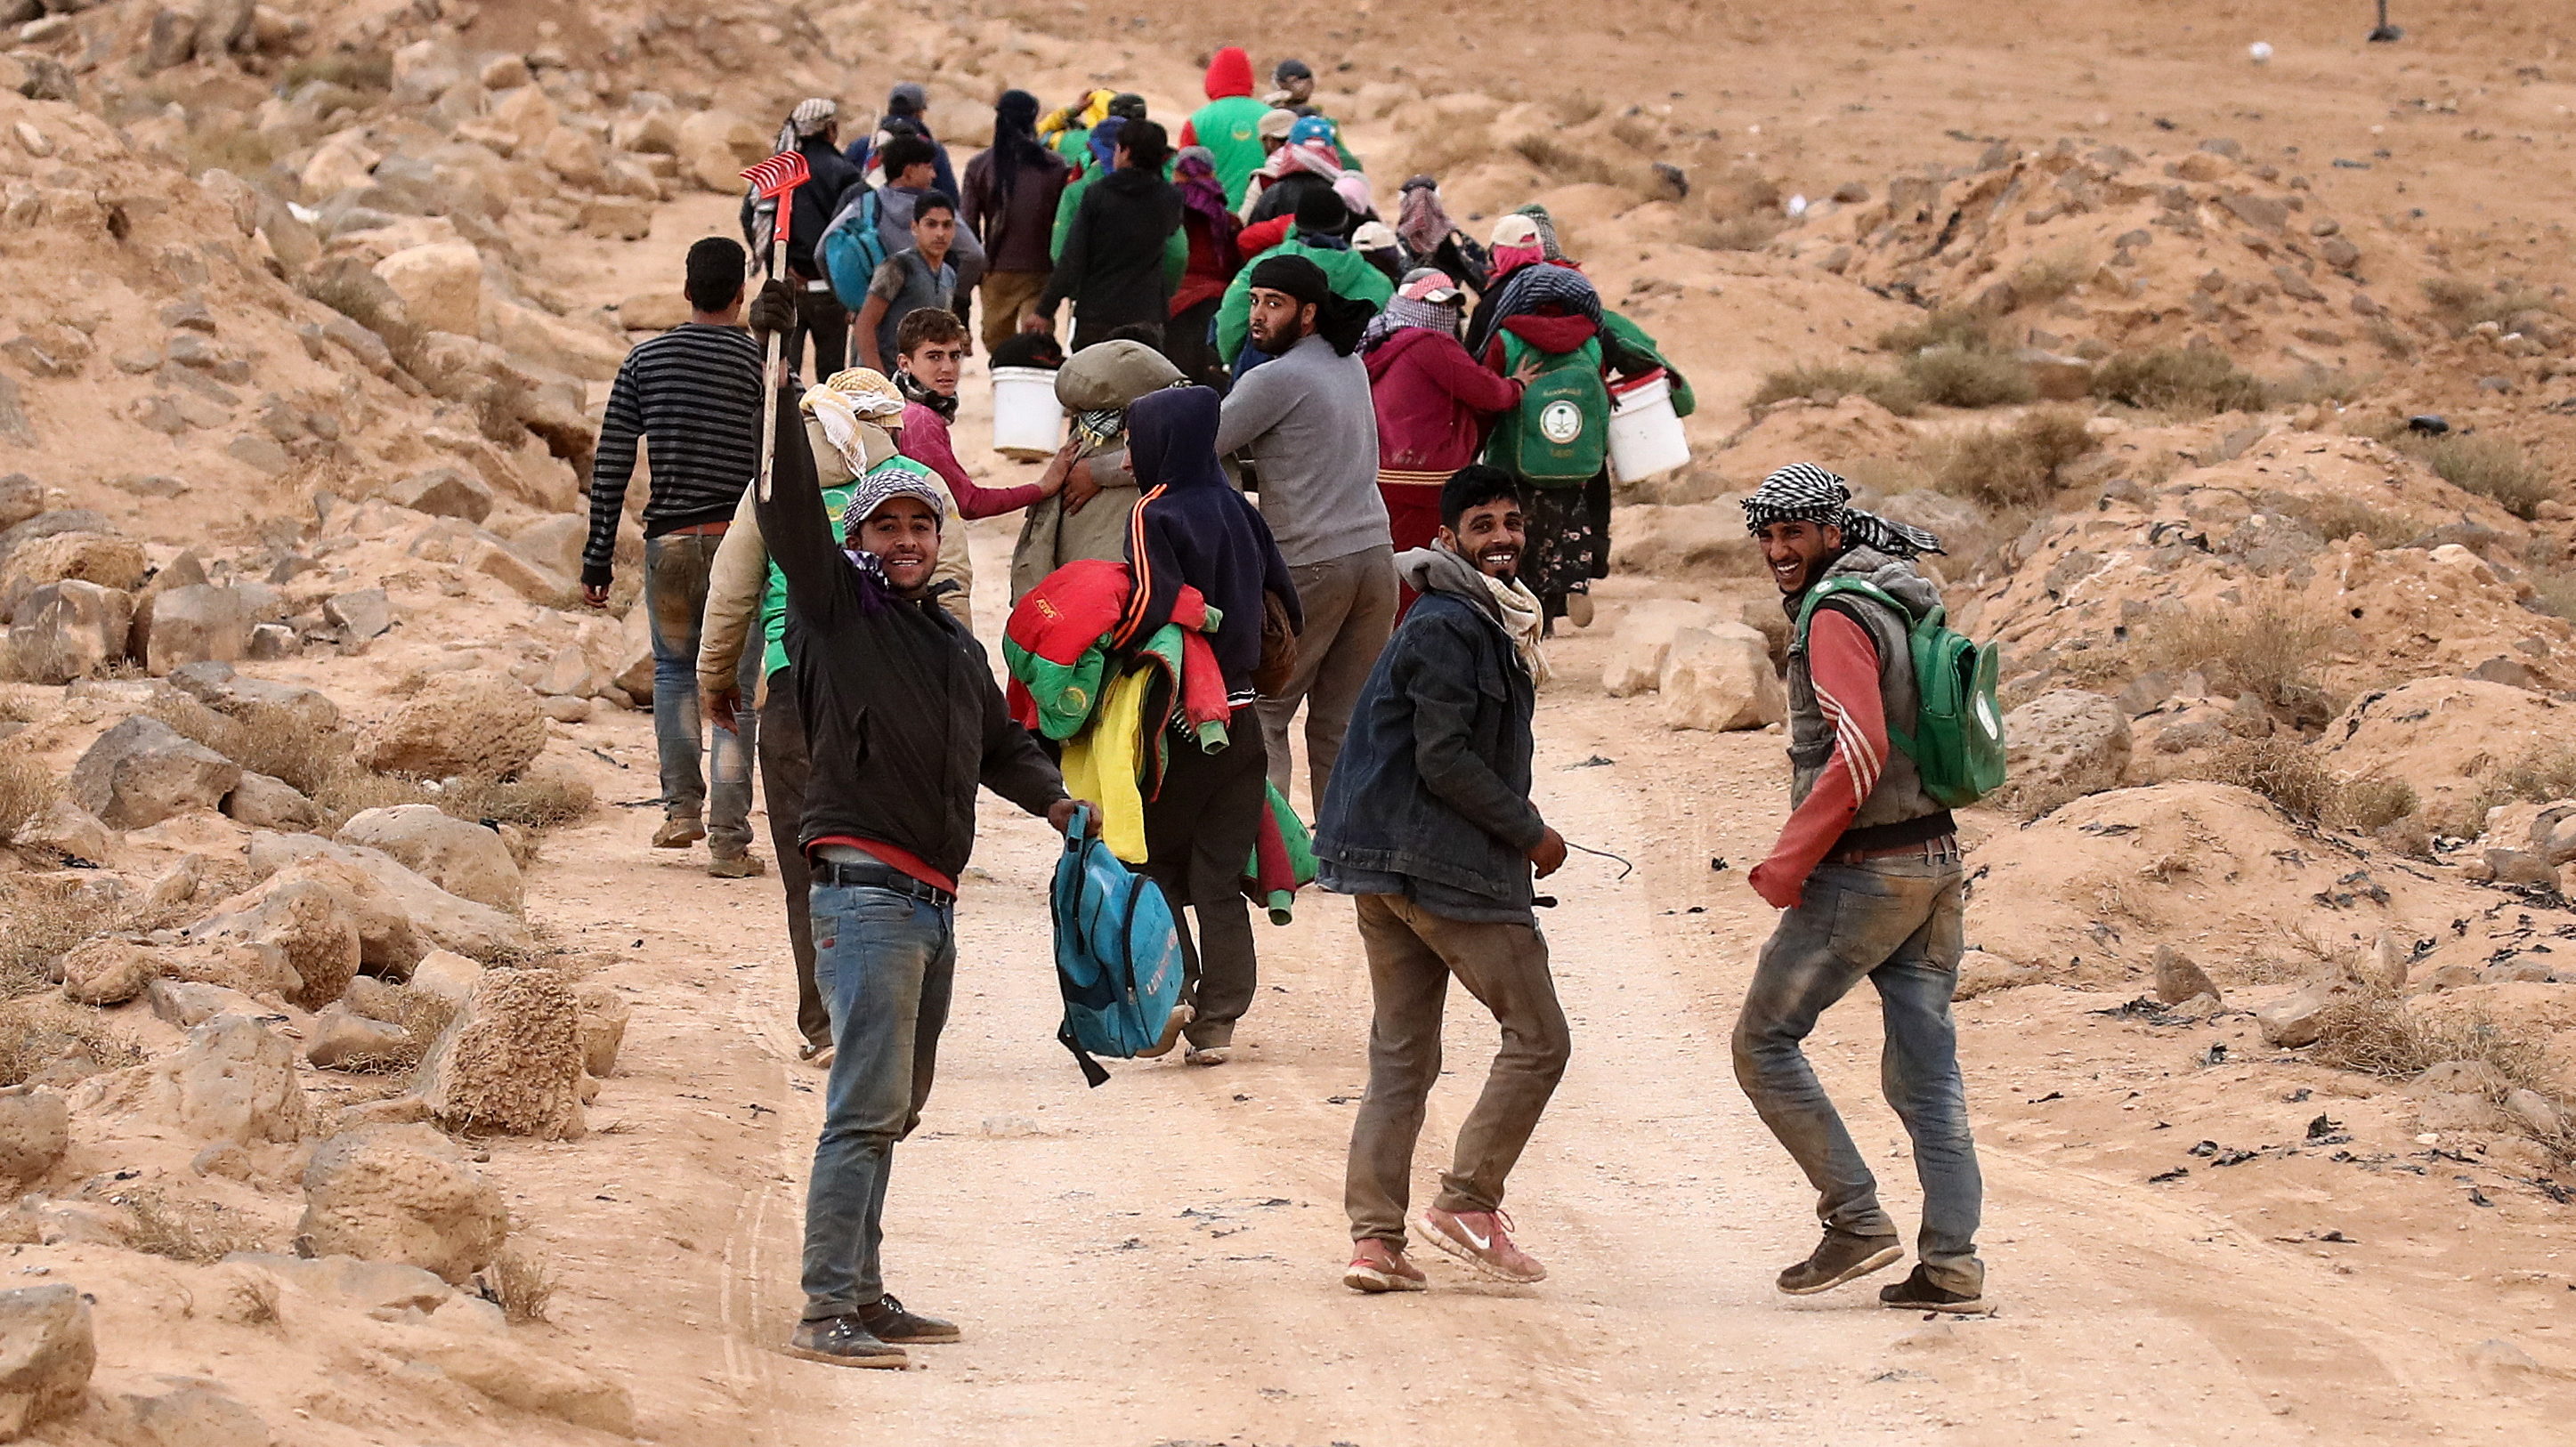 Jordanian Official: Economy Buckling under Burden of Syrian Refugees